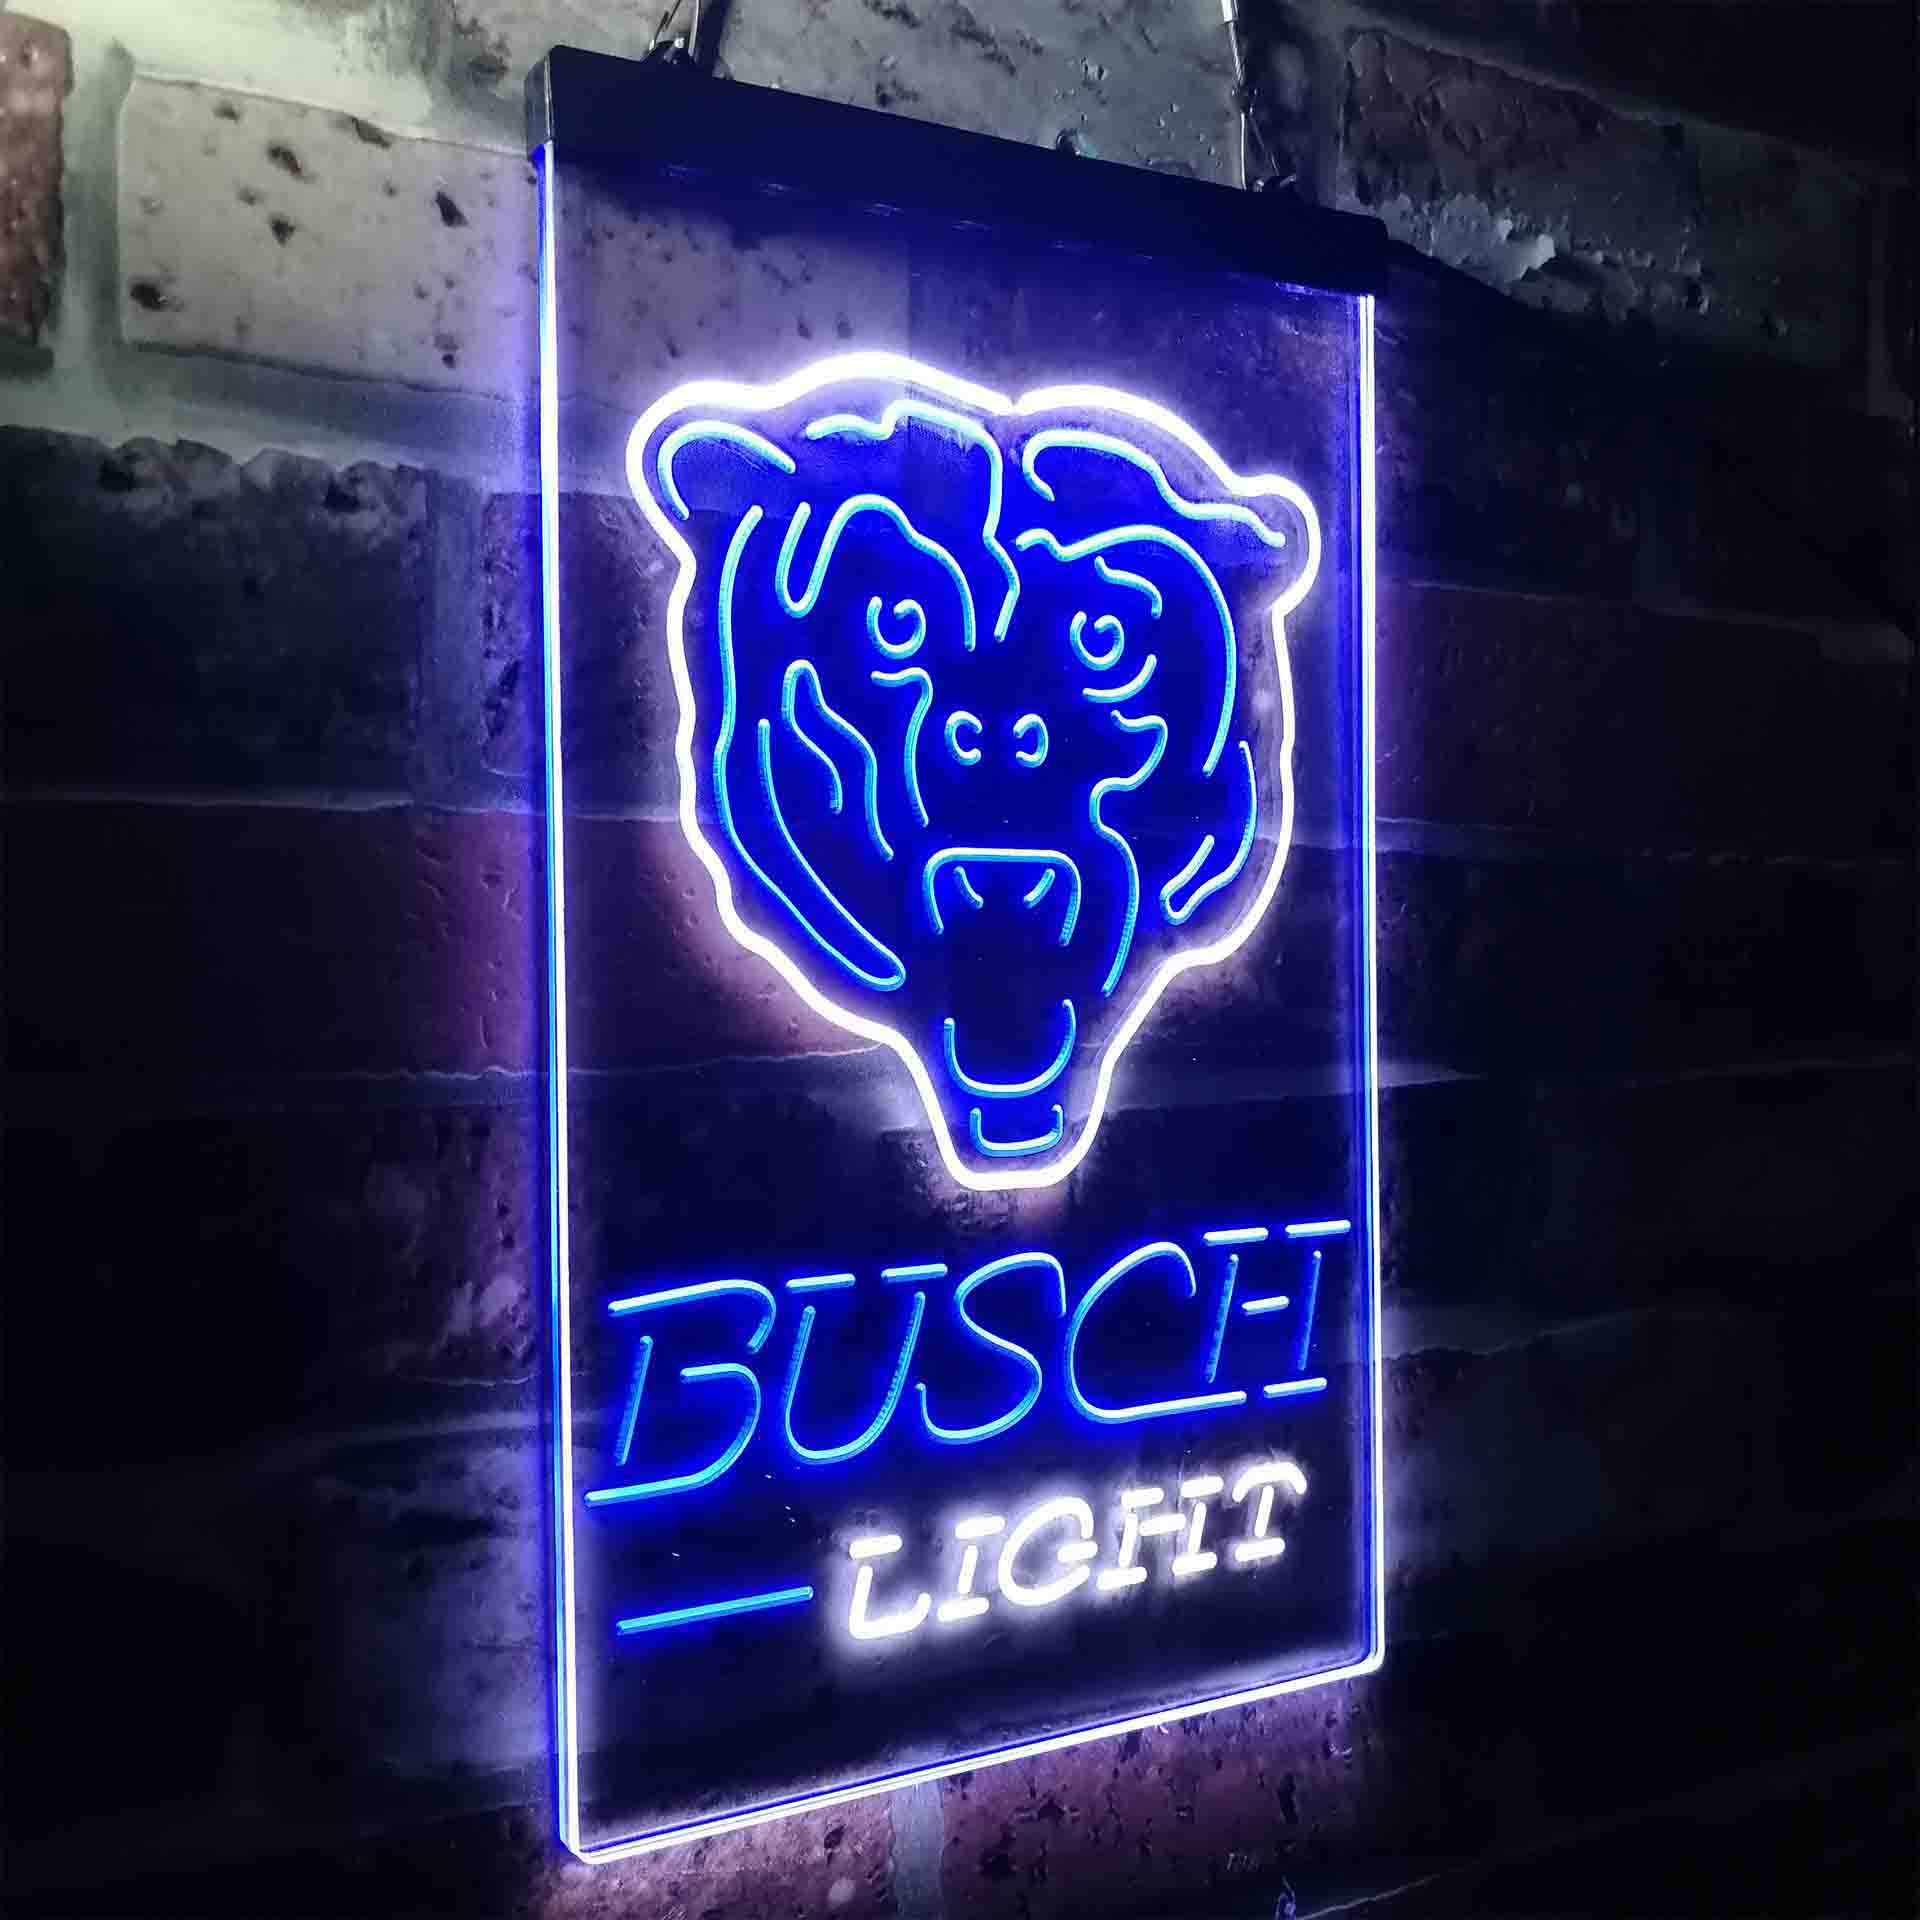 Chicago Bears Busch Light LED Neon Sign